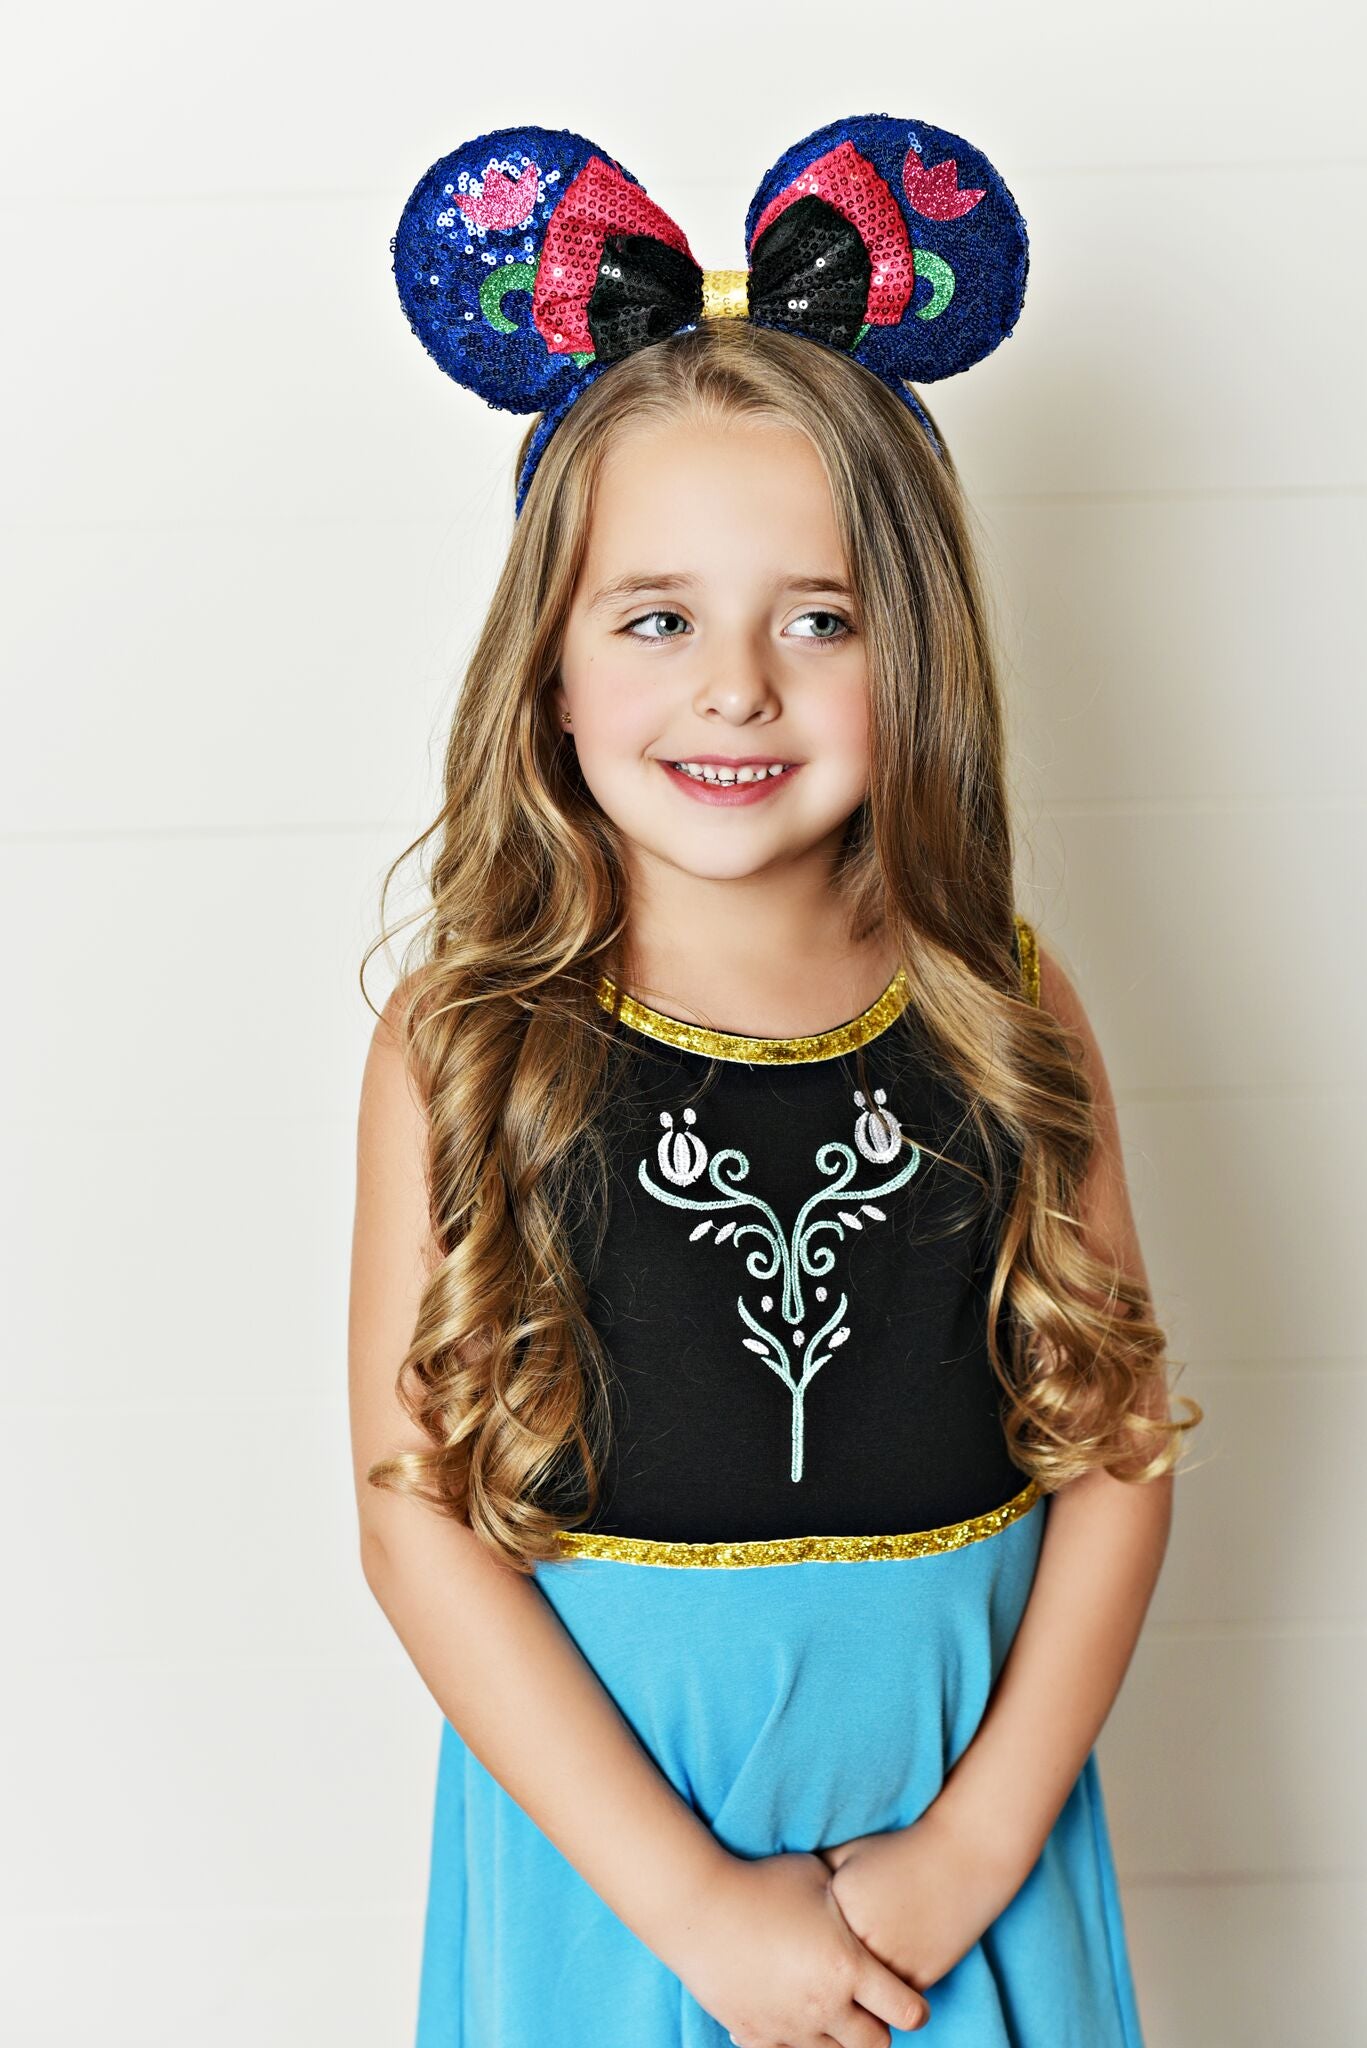 Sequin Minnie Mouse Ears - Ice Princess Ears Headband | Presley Couture